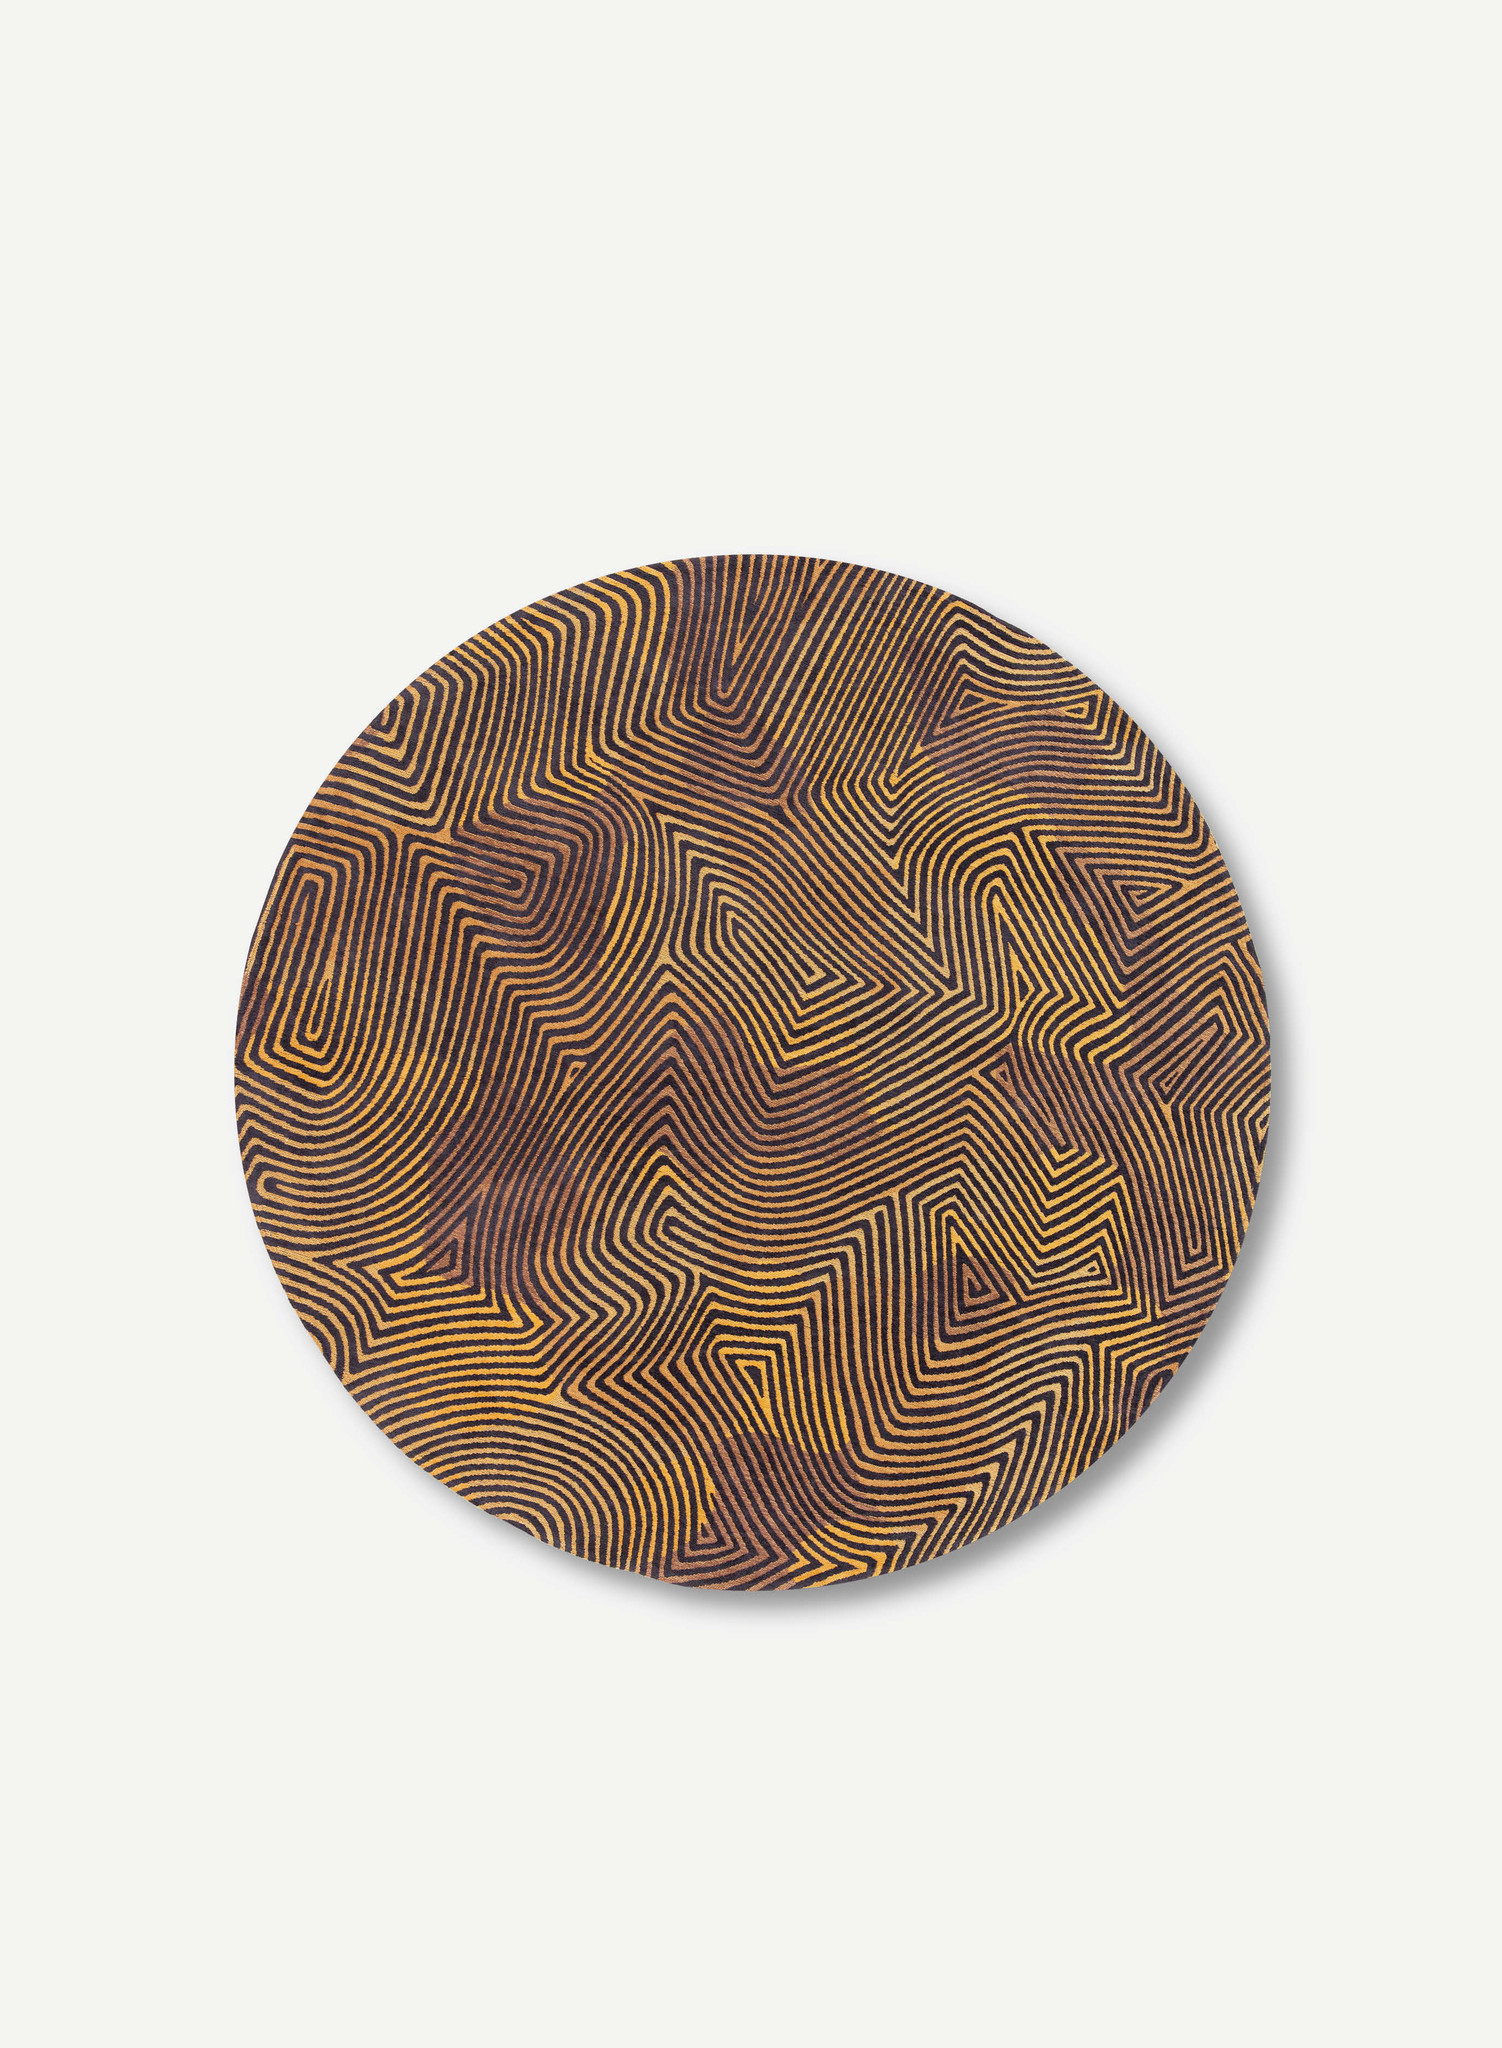 Black Gold Flatwoven Rug ☞ Size: 4' 7" x 6' 7" (140 x 200 cm)